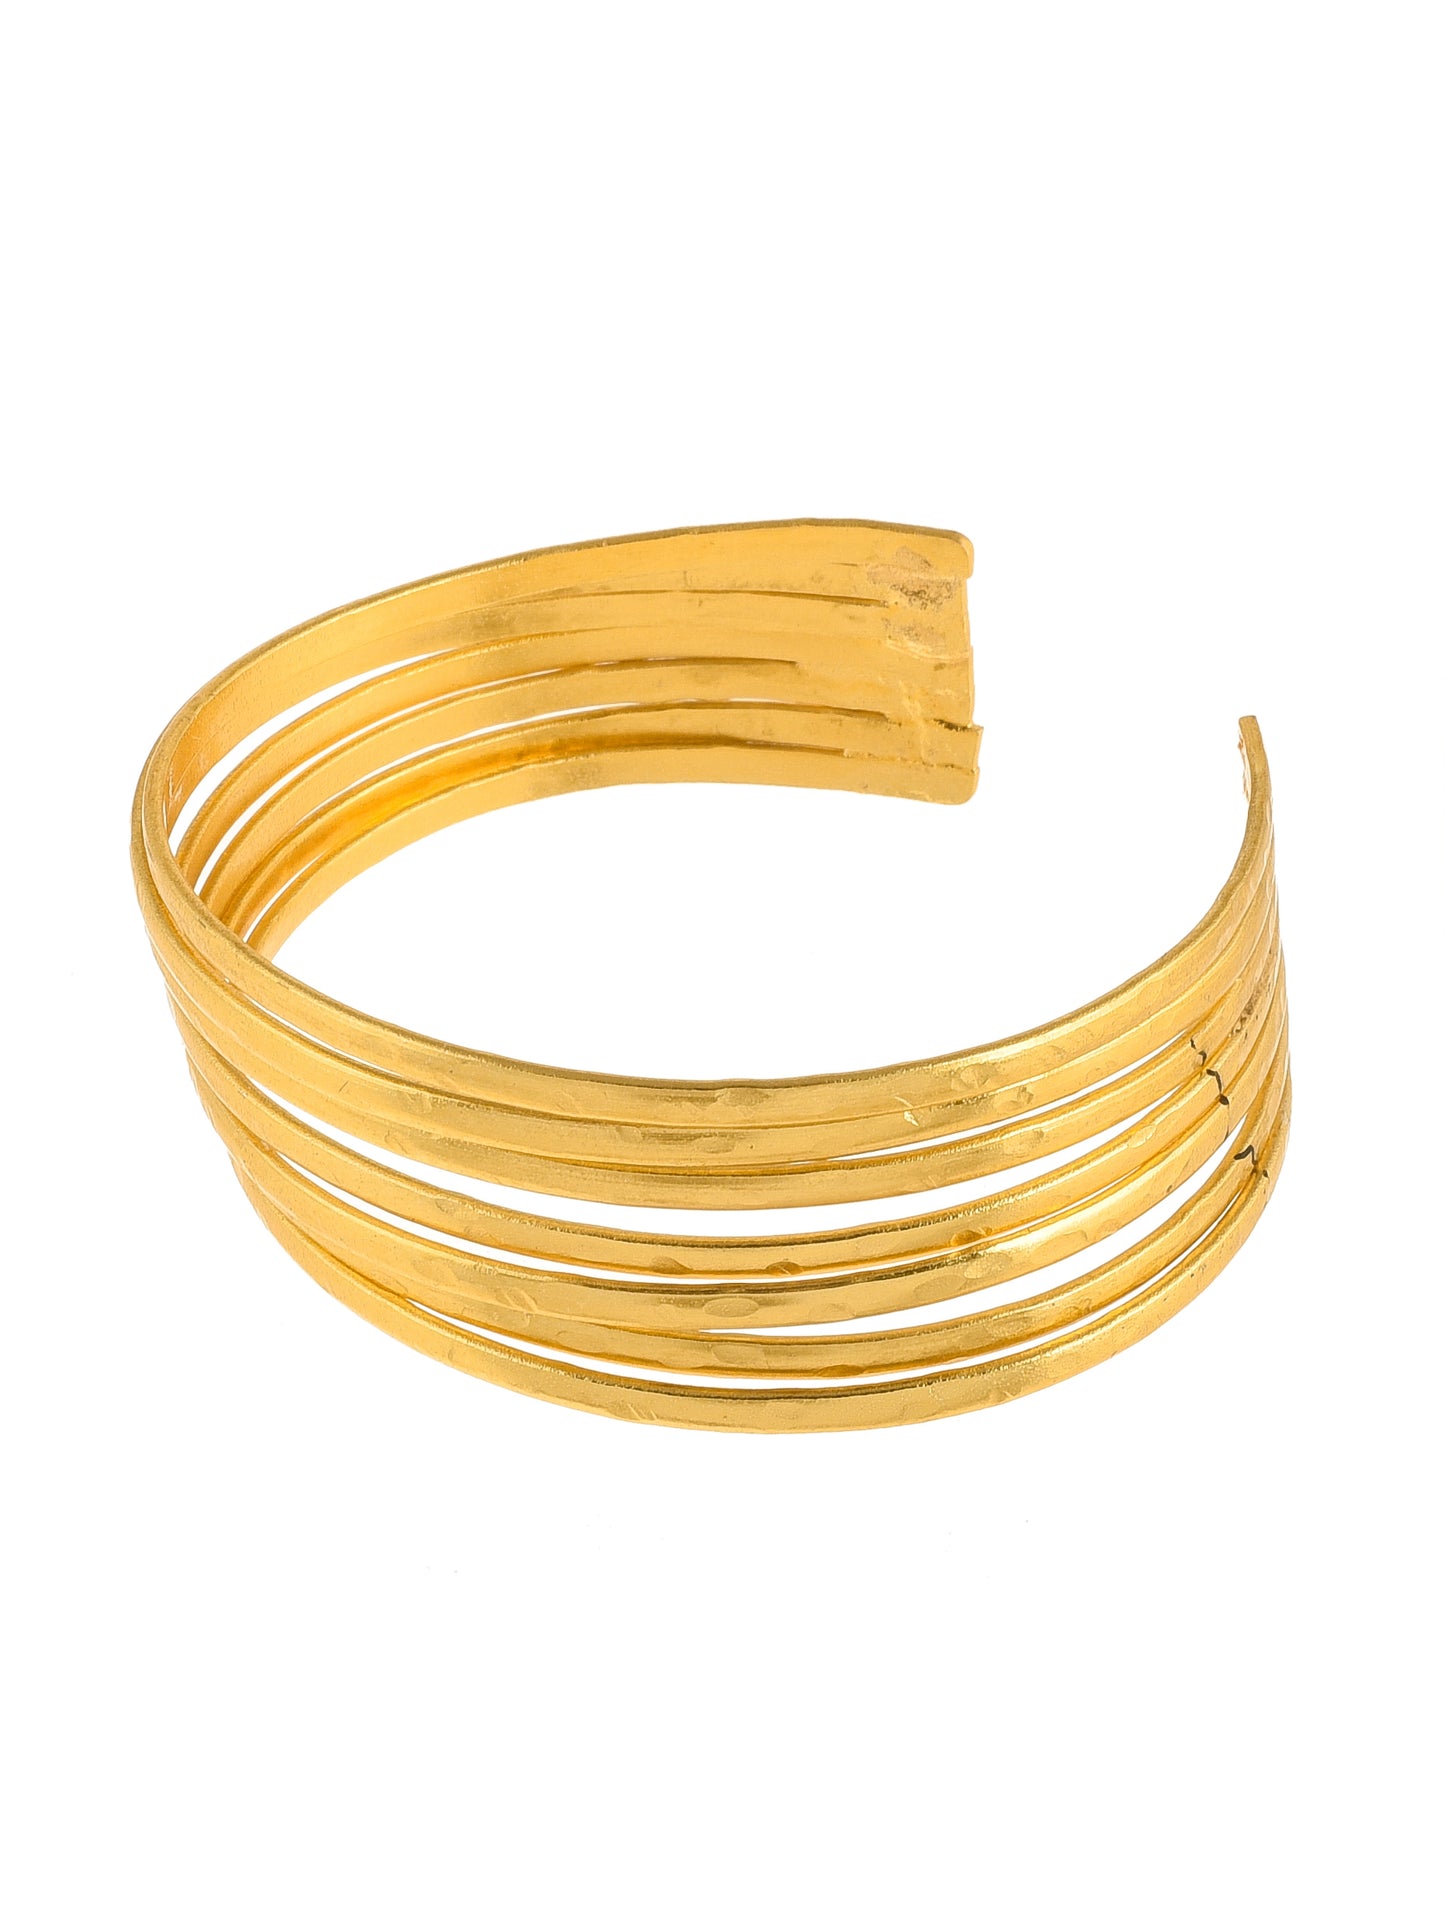 Contemporary hammered Brass bracelet